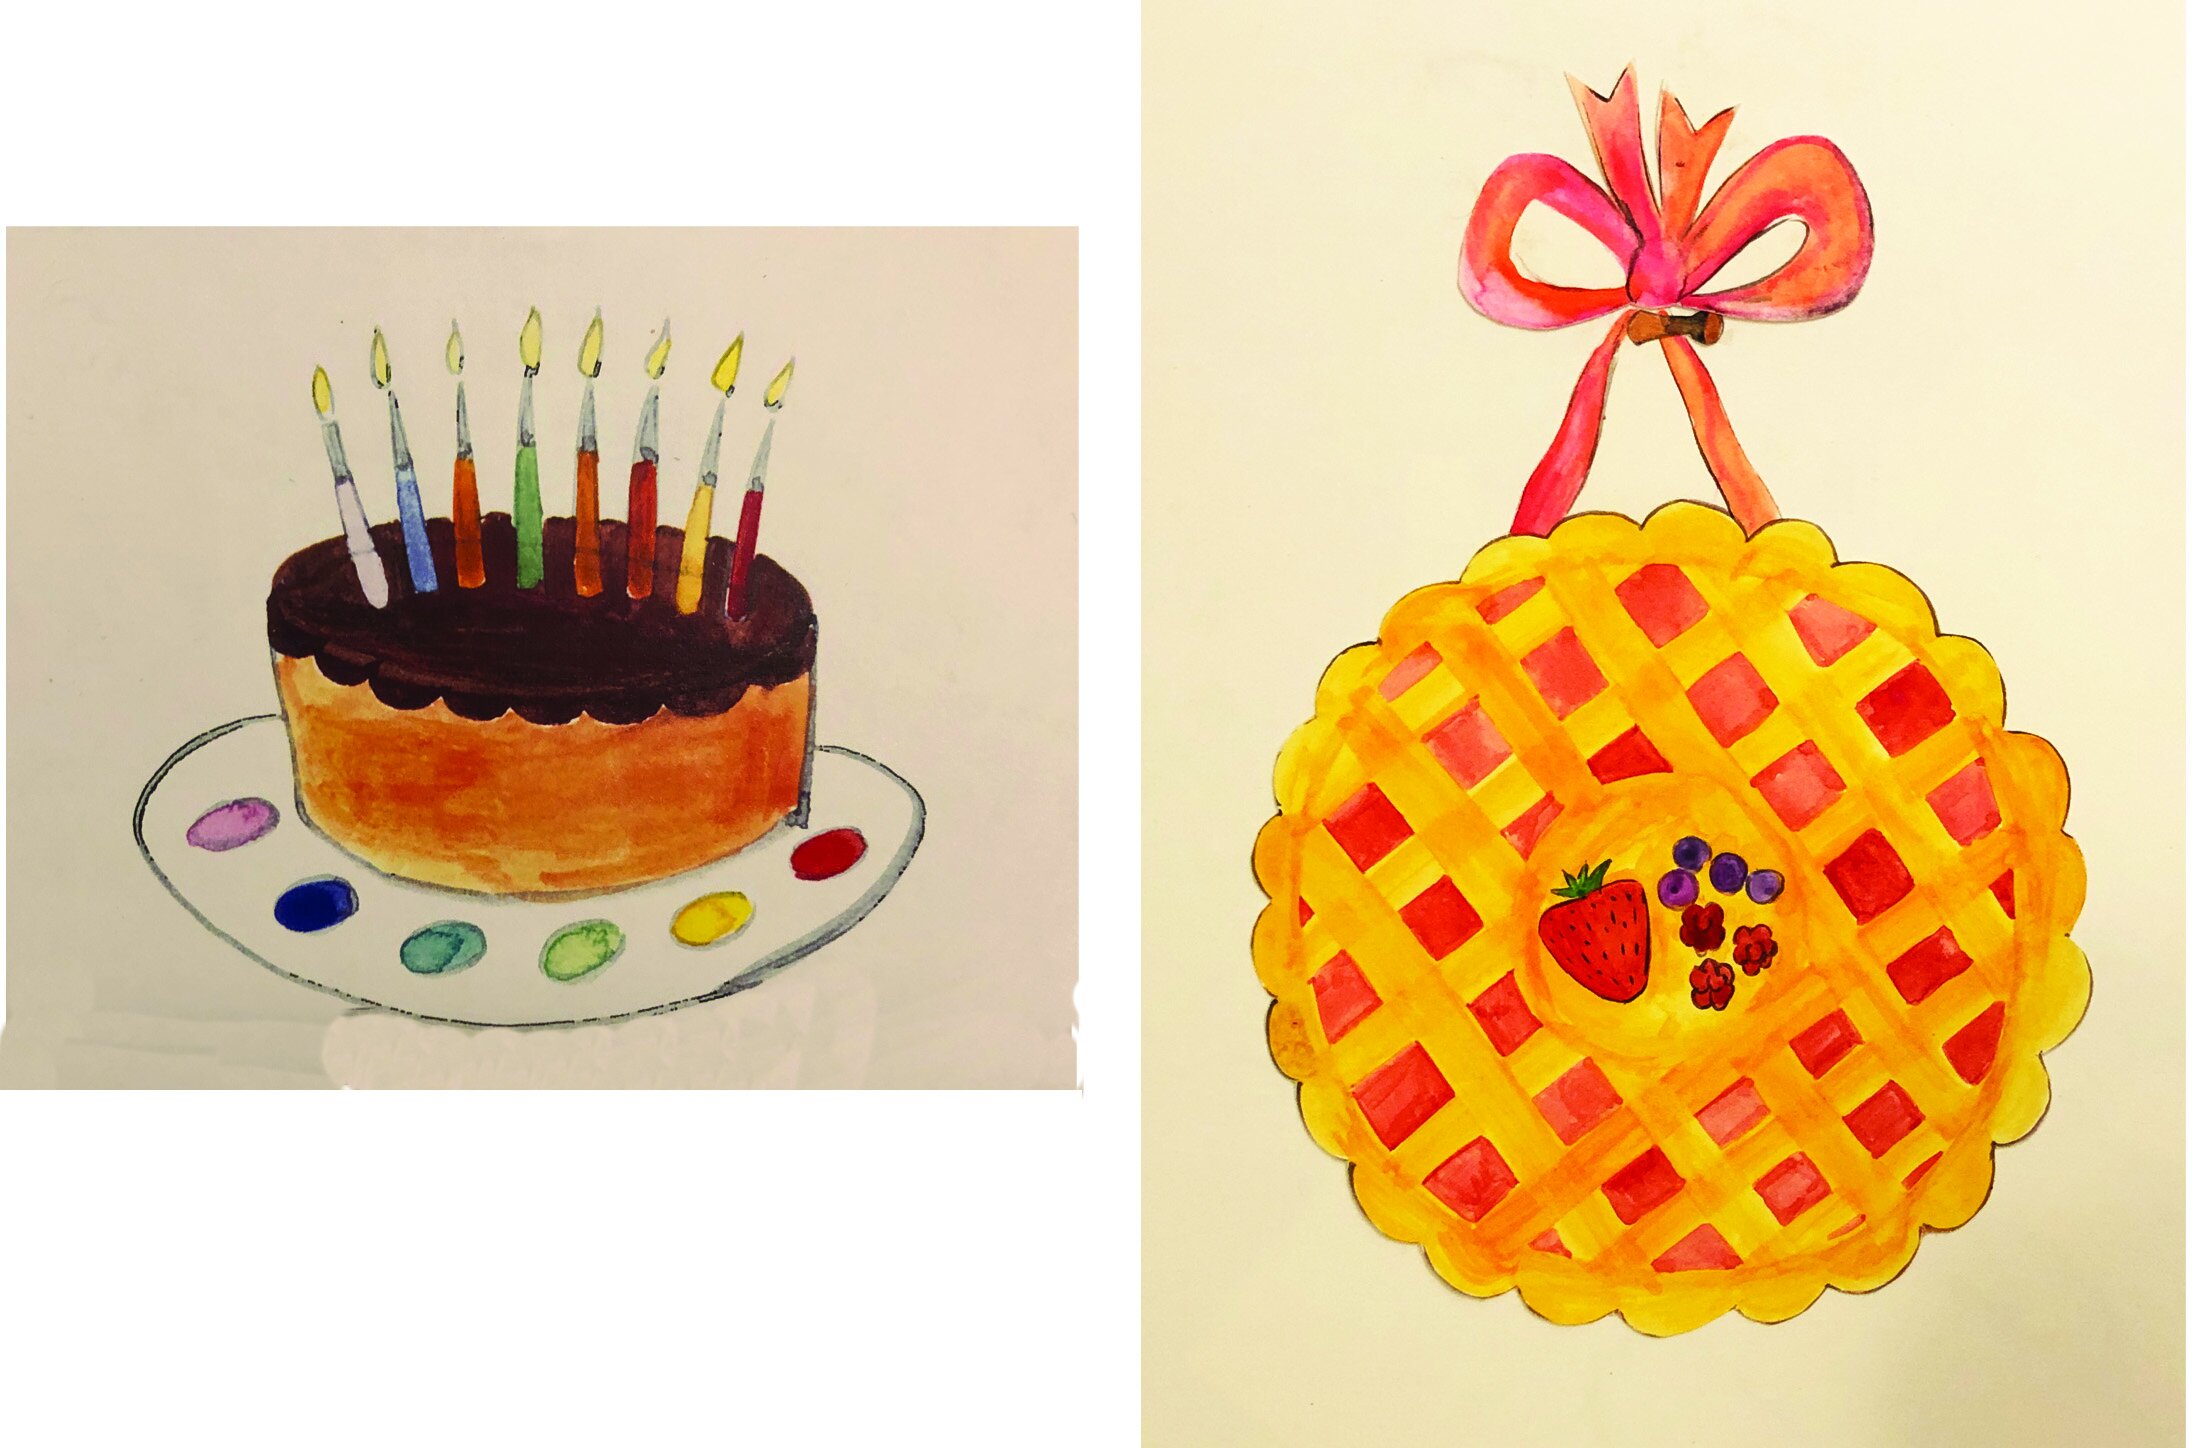 Artist's Birthday Cake, Pie on the Wall